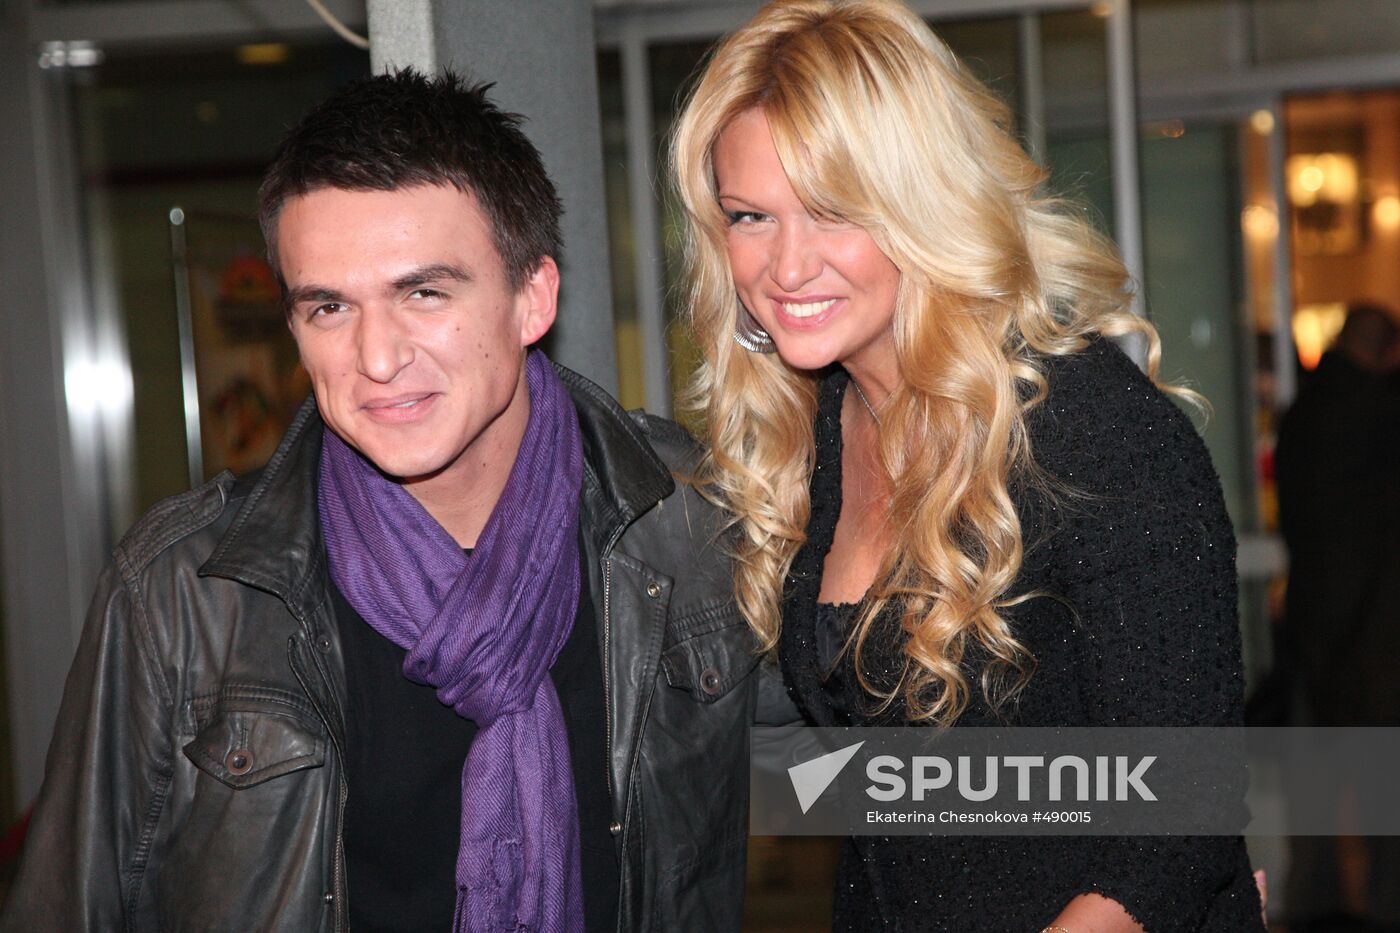 Vlad Topalov and Viktoria Lopyryova attend This Is It premiere